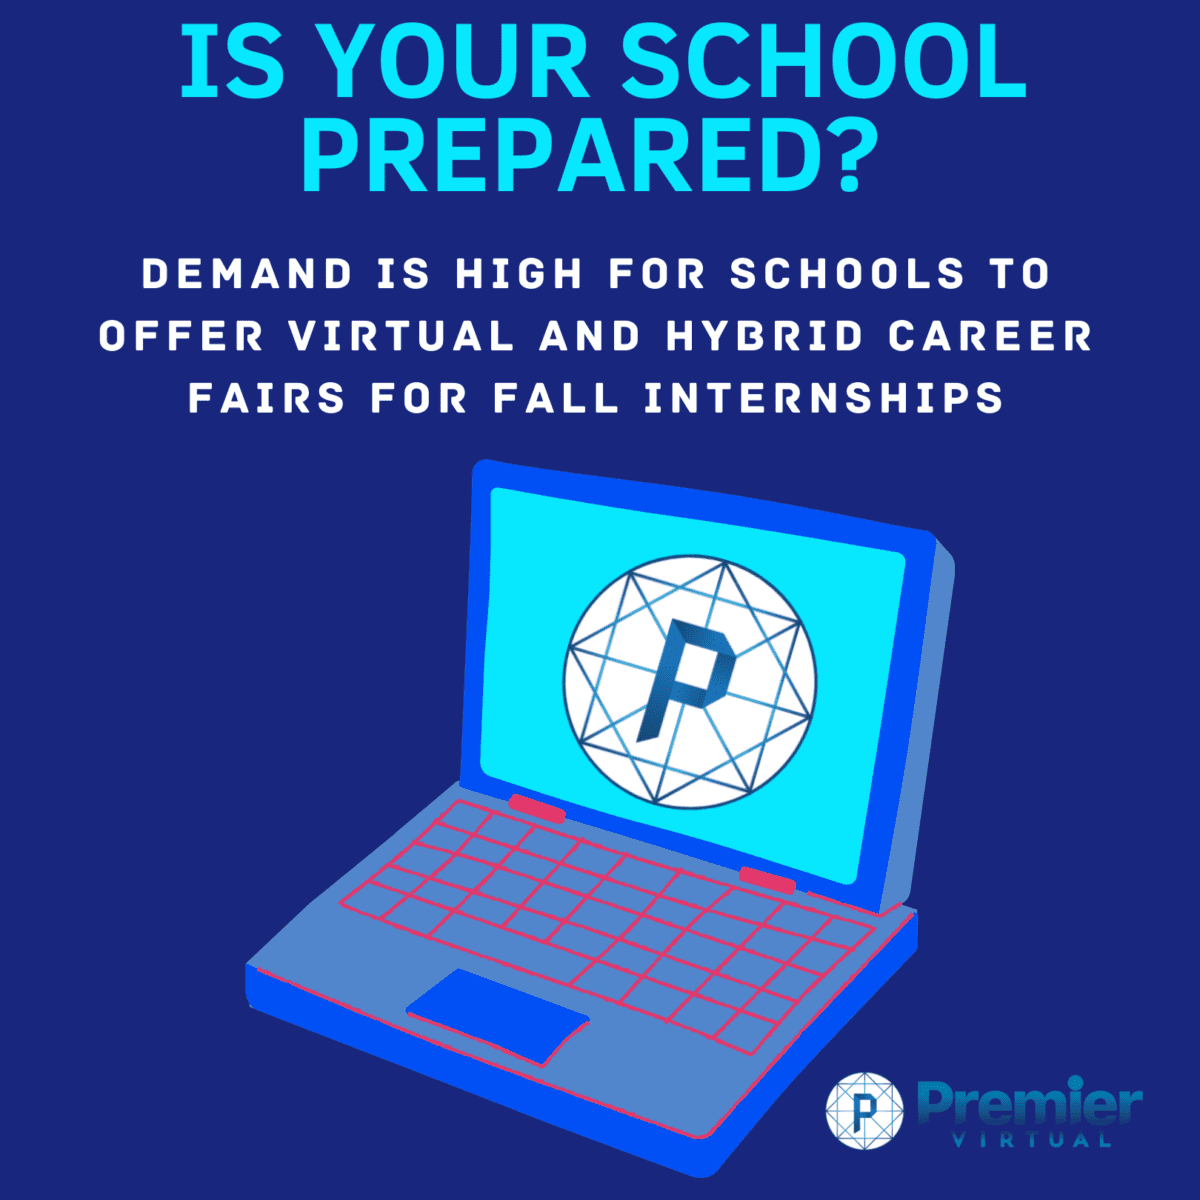 Premier Virtual - Is Your School Prepared for fall internships?